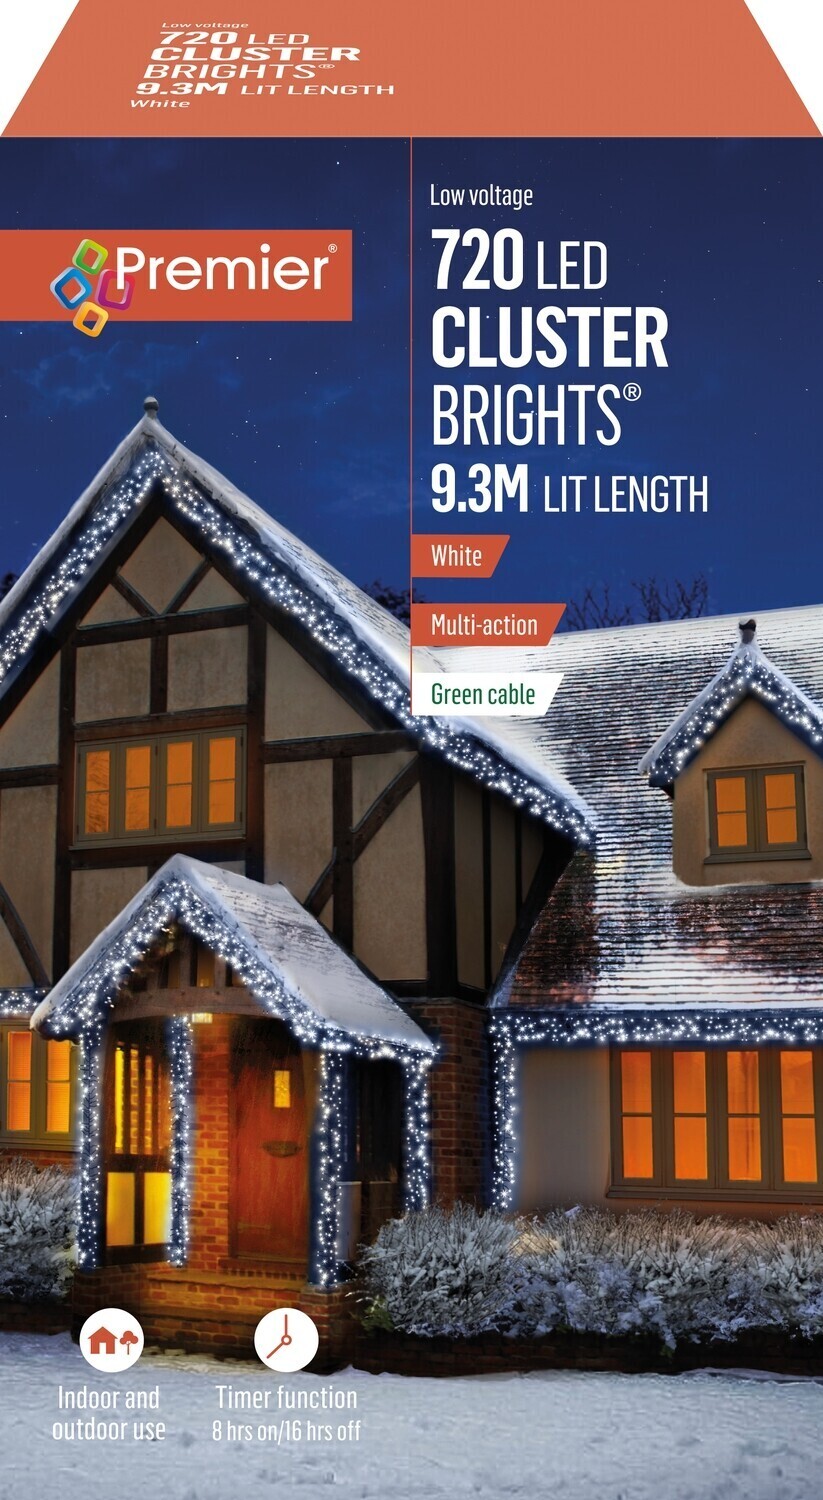 Premier Ice White 720 LED Cluster Brights